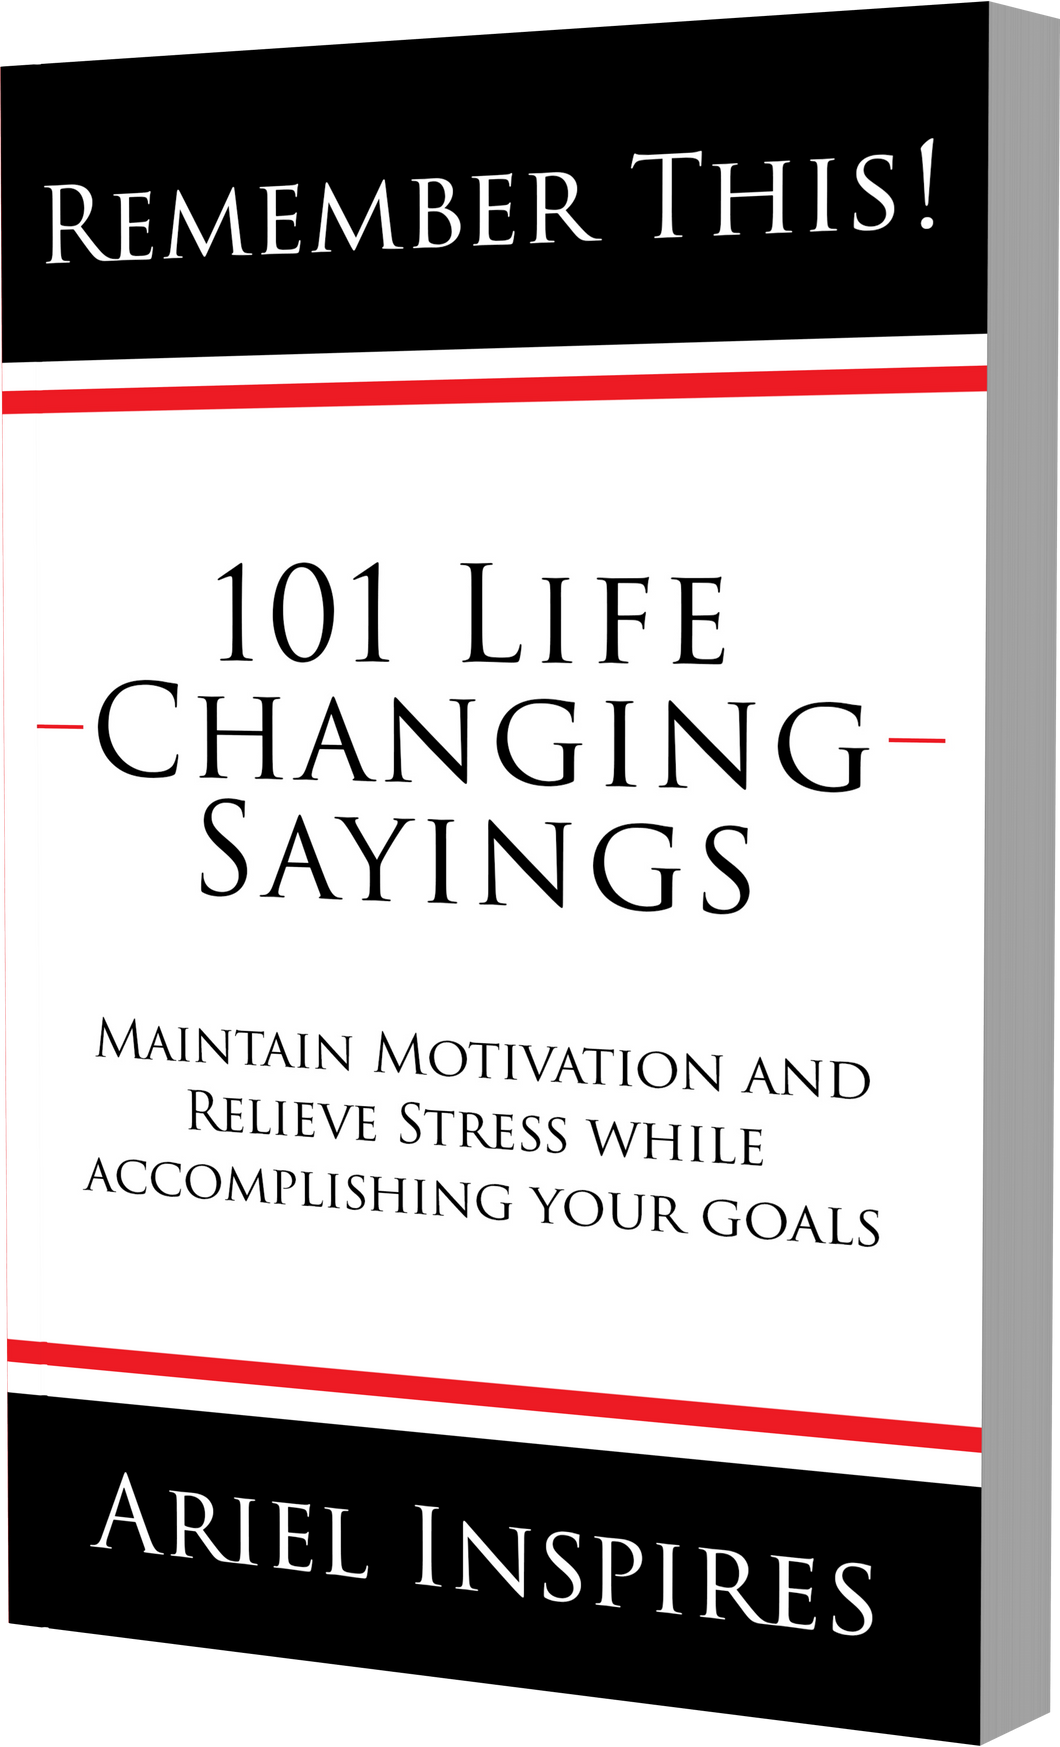 Remember This: 101 Life Changing Sayings